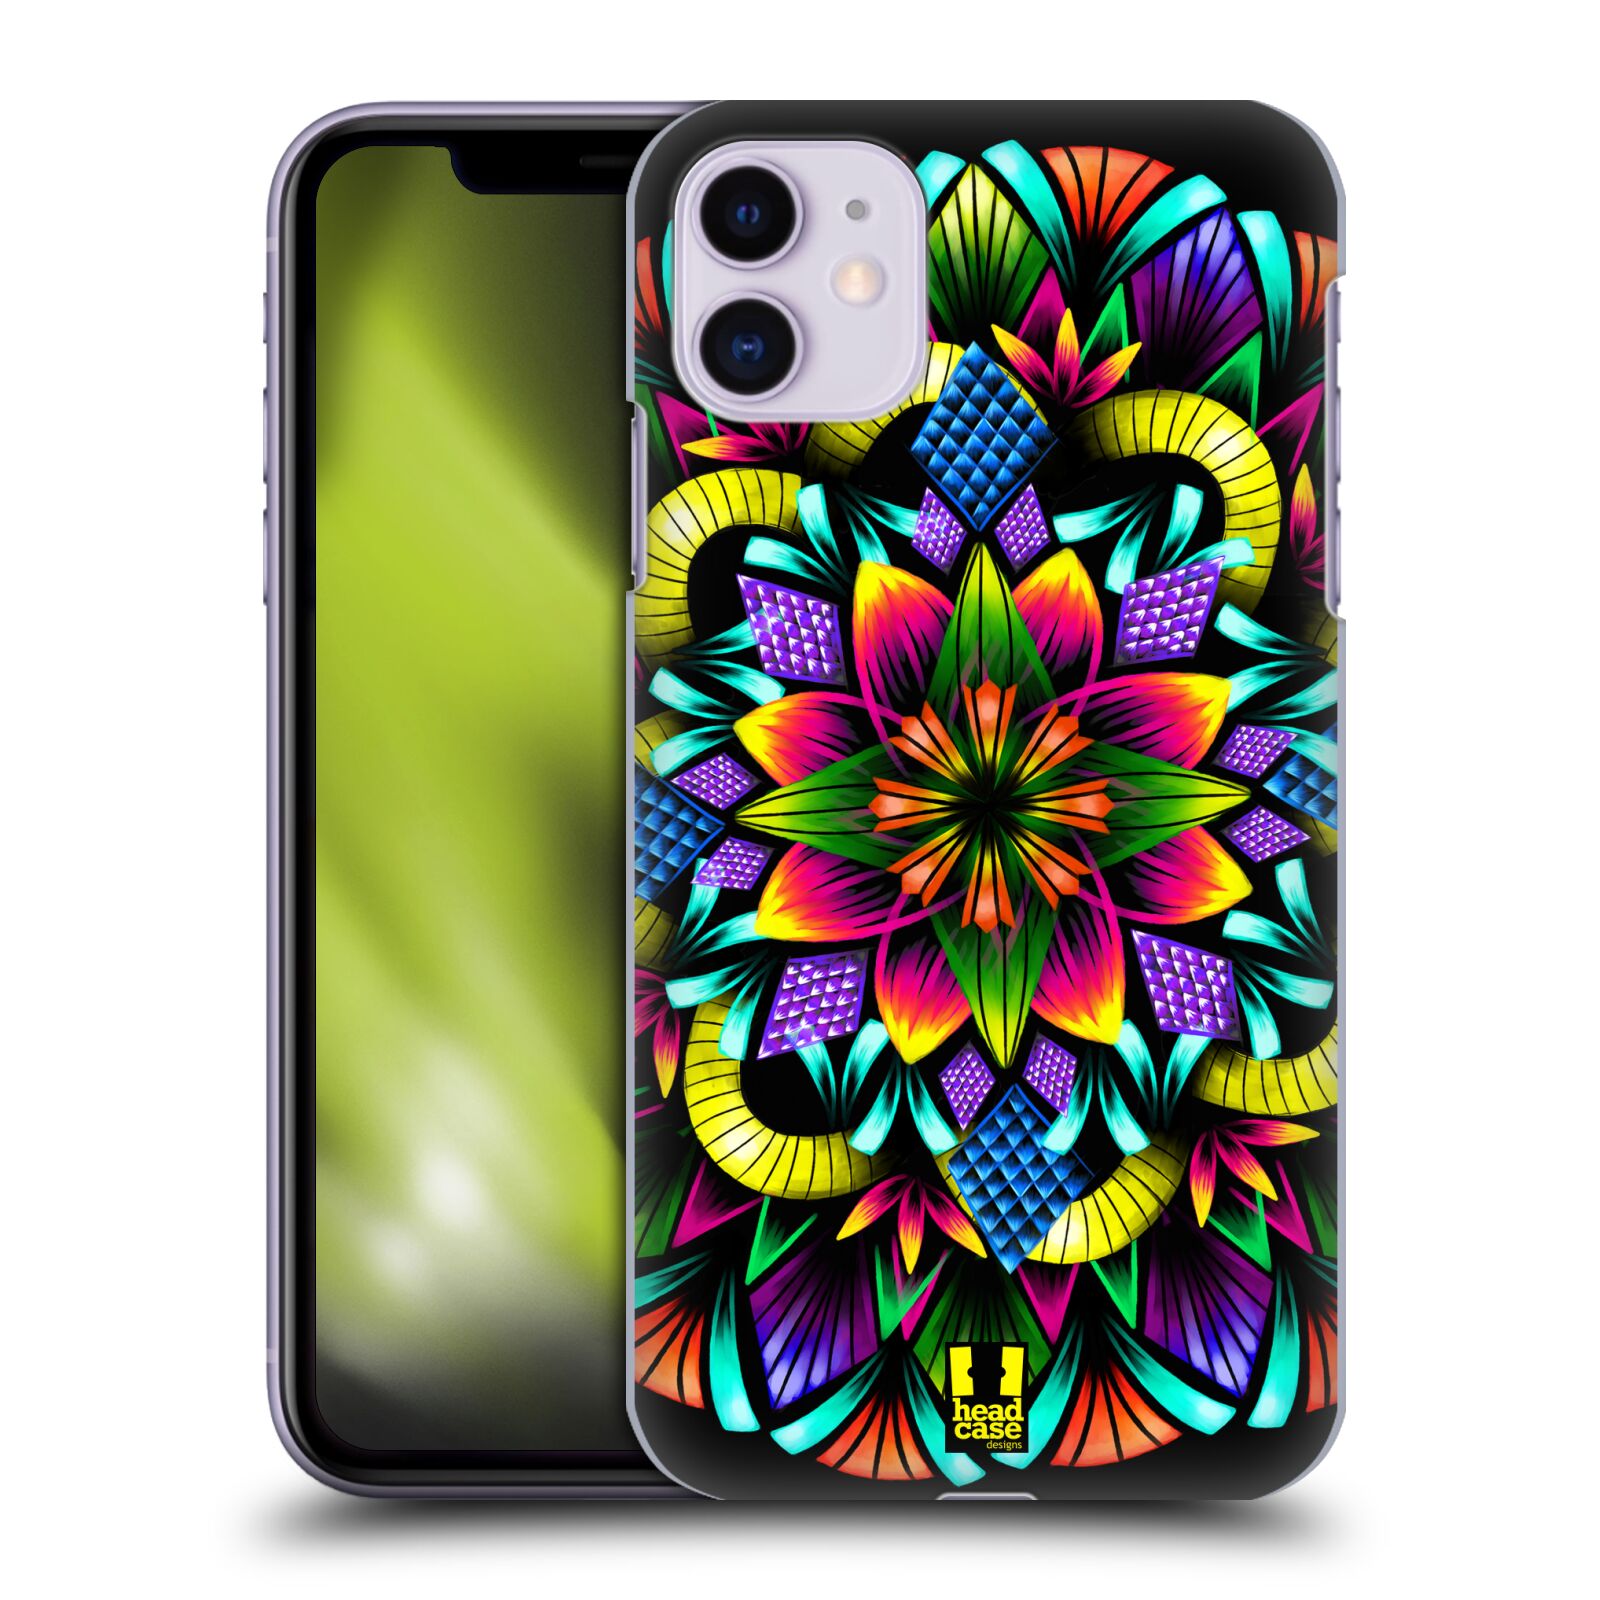 Pouzdro na mobil Apple Iphone 11 - HEAD CASE - vzor Indie Mandala kaleidoskop barevný vzor KVĚTINA